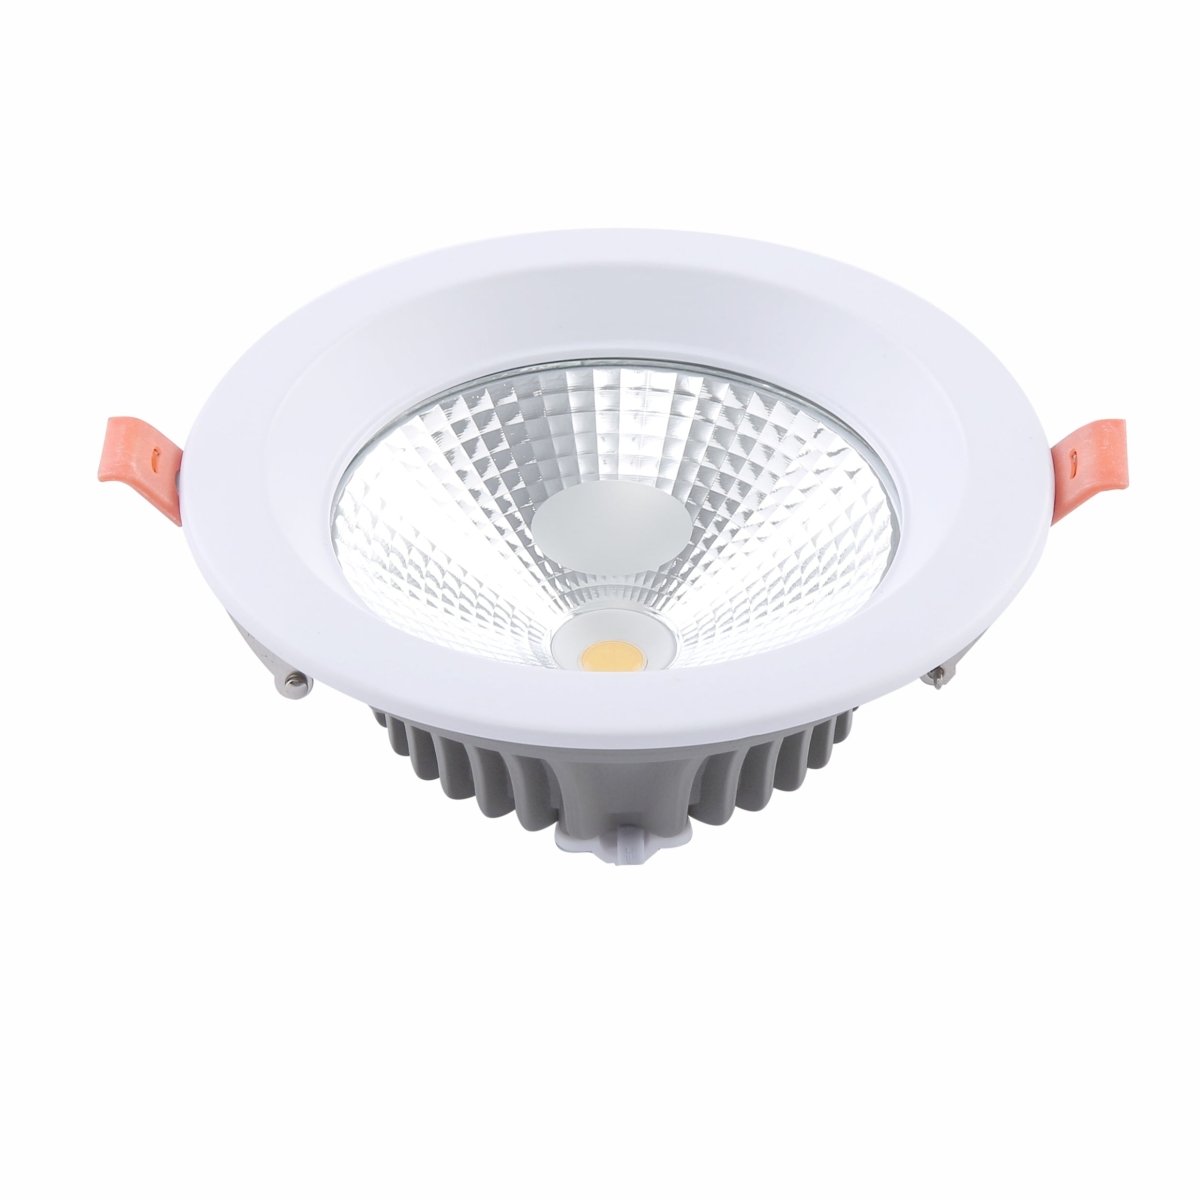 Main image of LED COB Recessed Downlight 10W Cool White 5000K White | TEKLED 165-03400